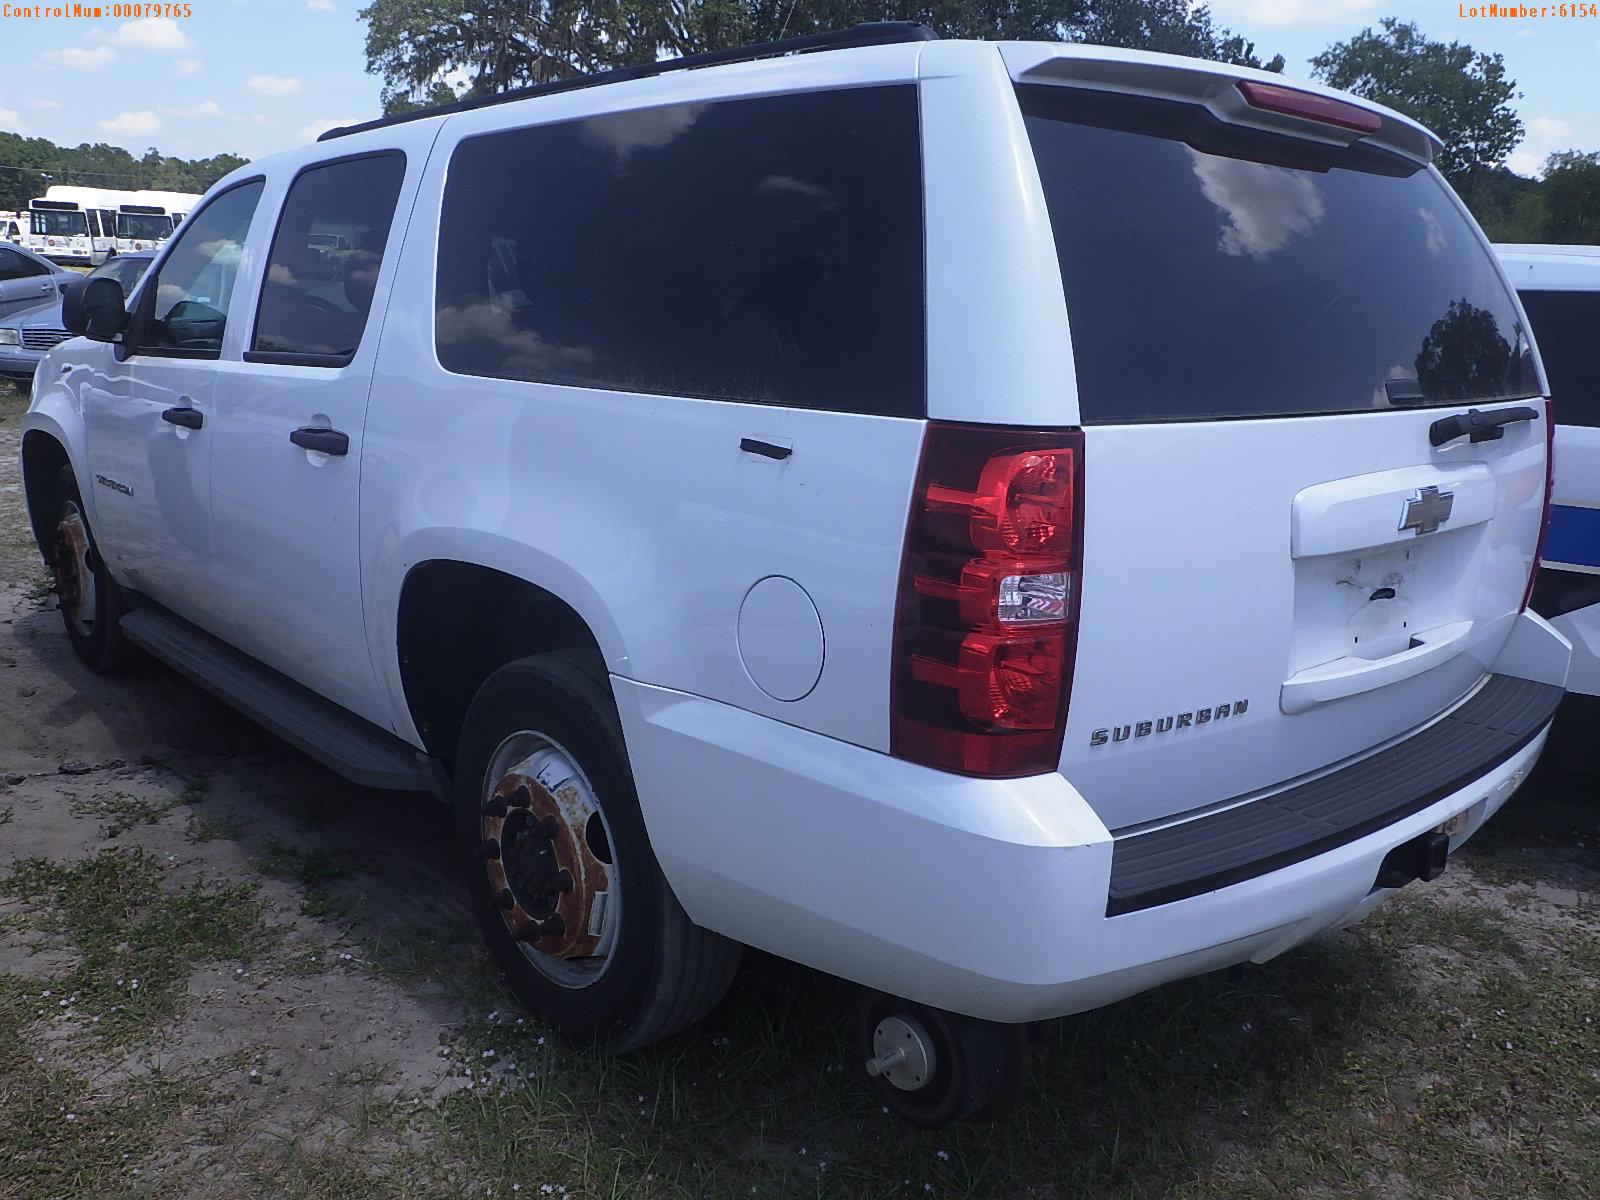 5-06154 (Cars-SUV 4D)  Seller: Florida State D.O.T. 2011 CHEV SUBURBAN